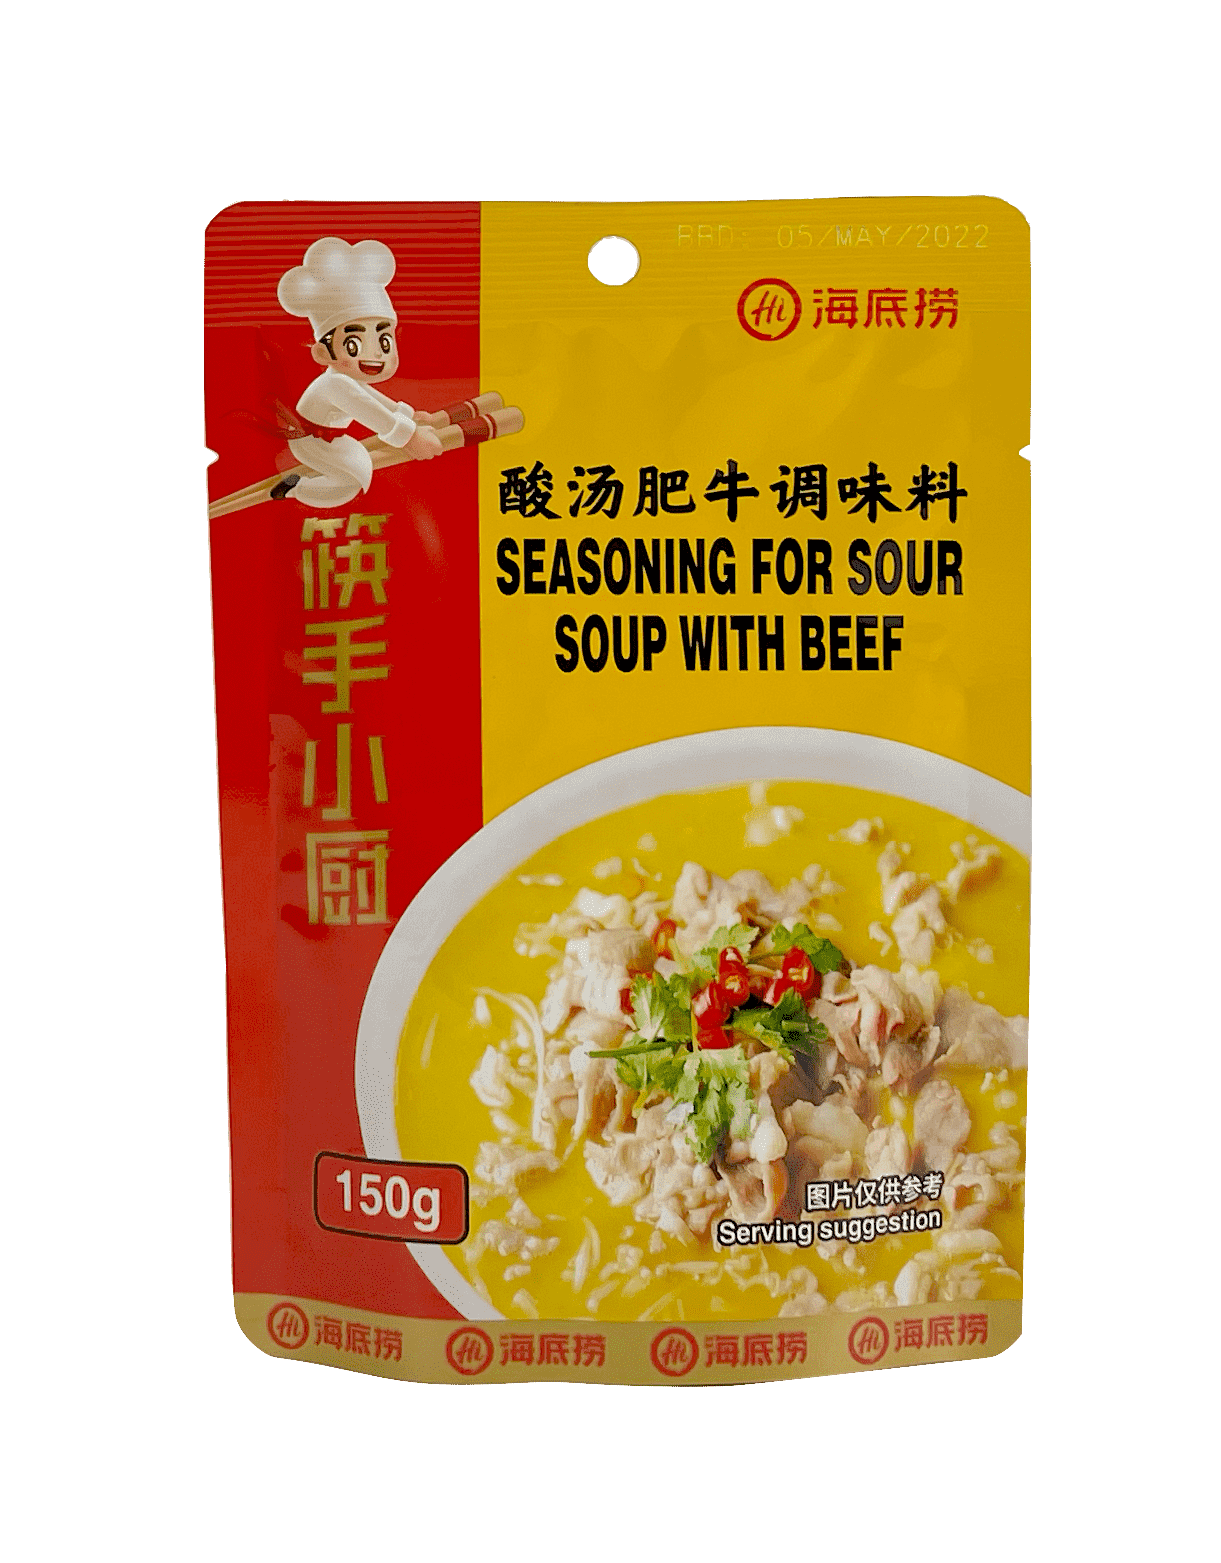 Sour Soup with Beef Seasoning 150g STFNTWL Haidilao China